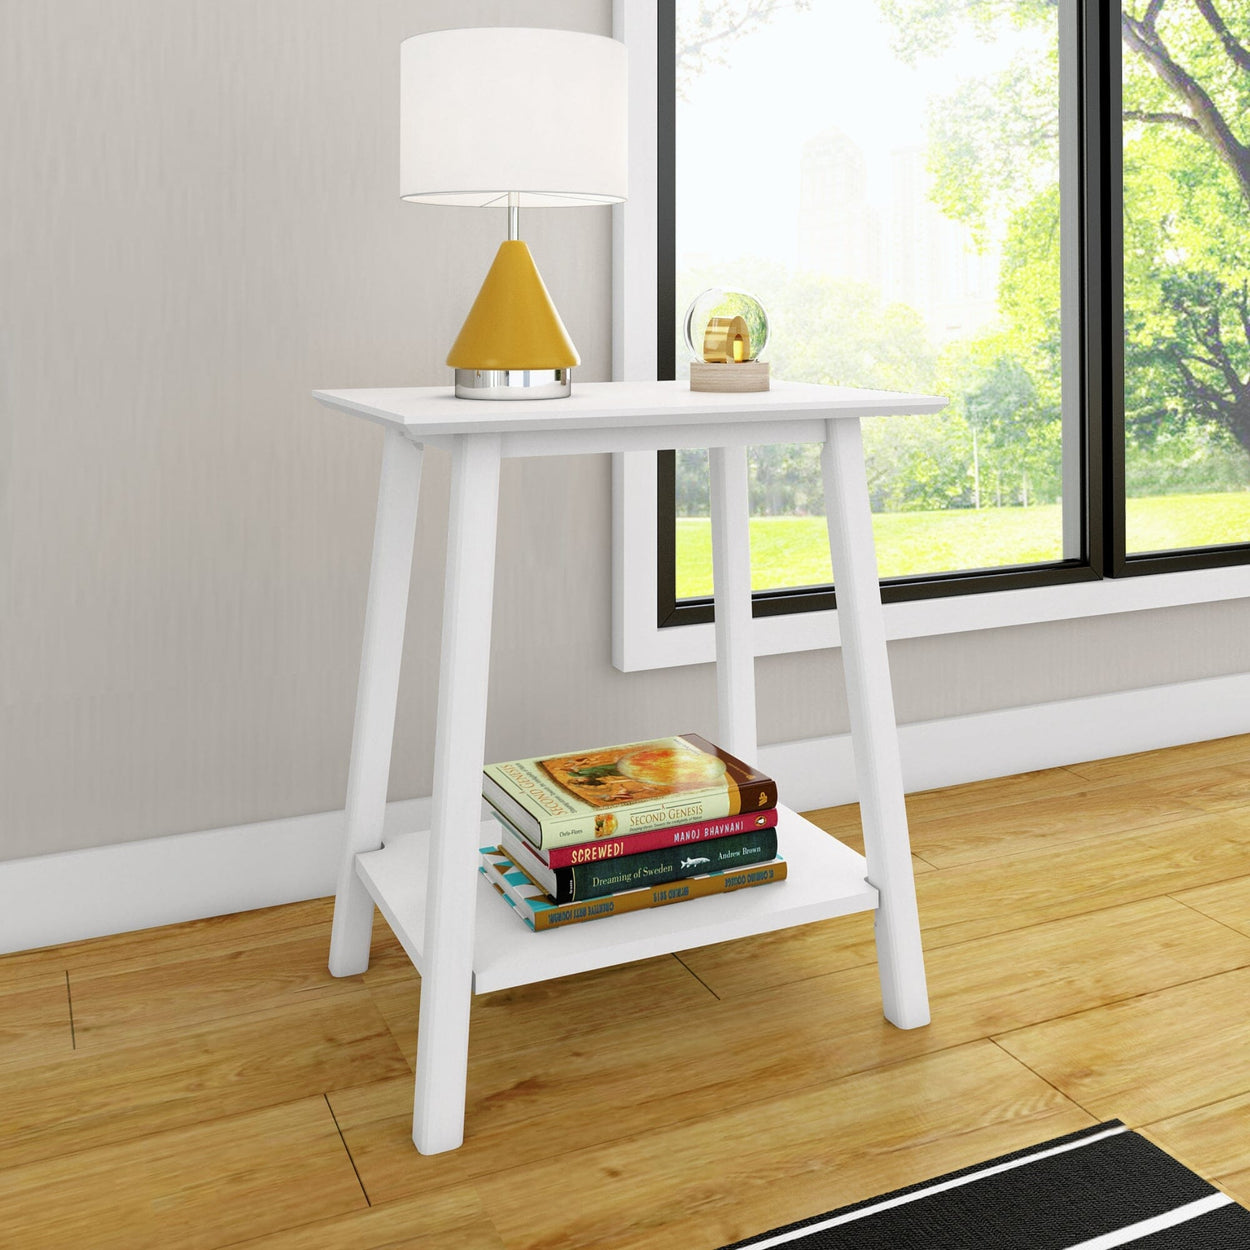 200009-002 : Furniture Mid-Century Modern Table Nightstand, White